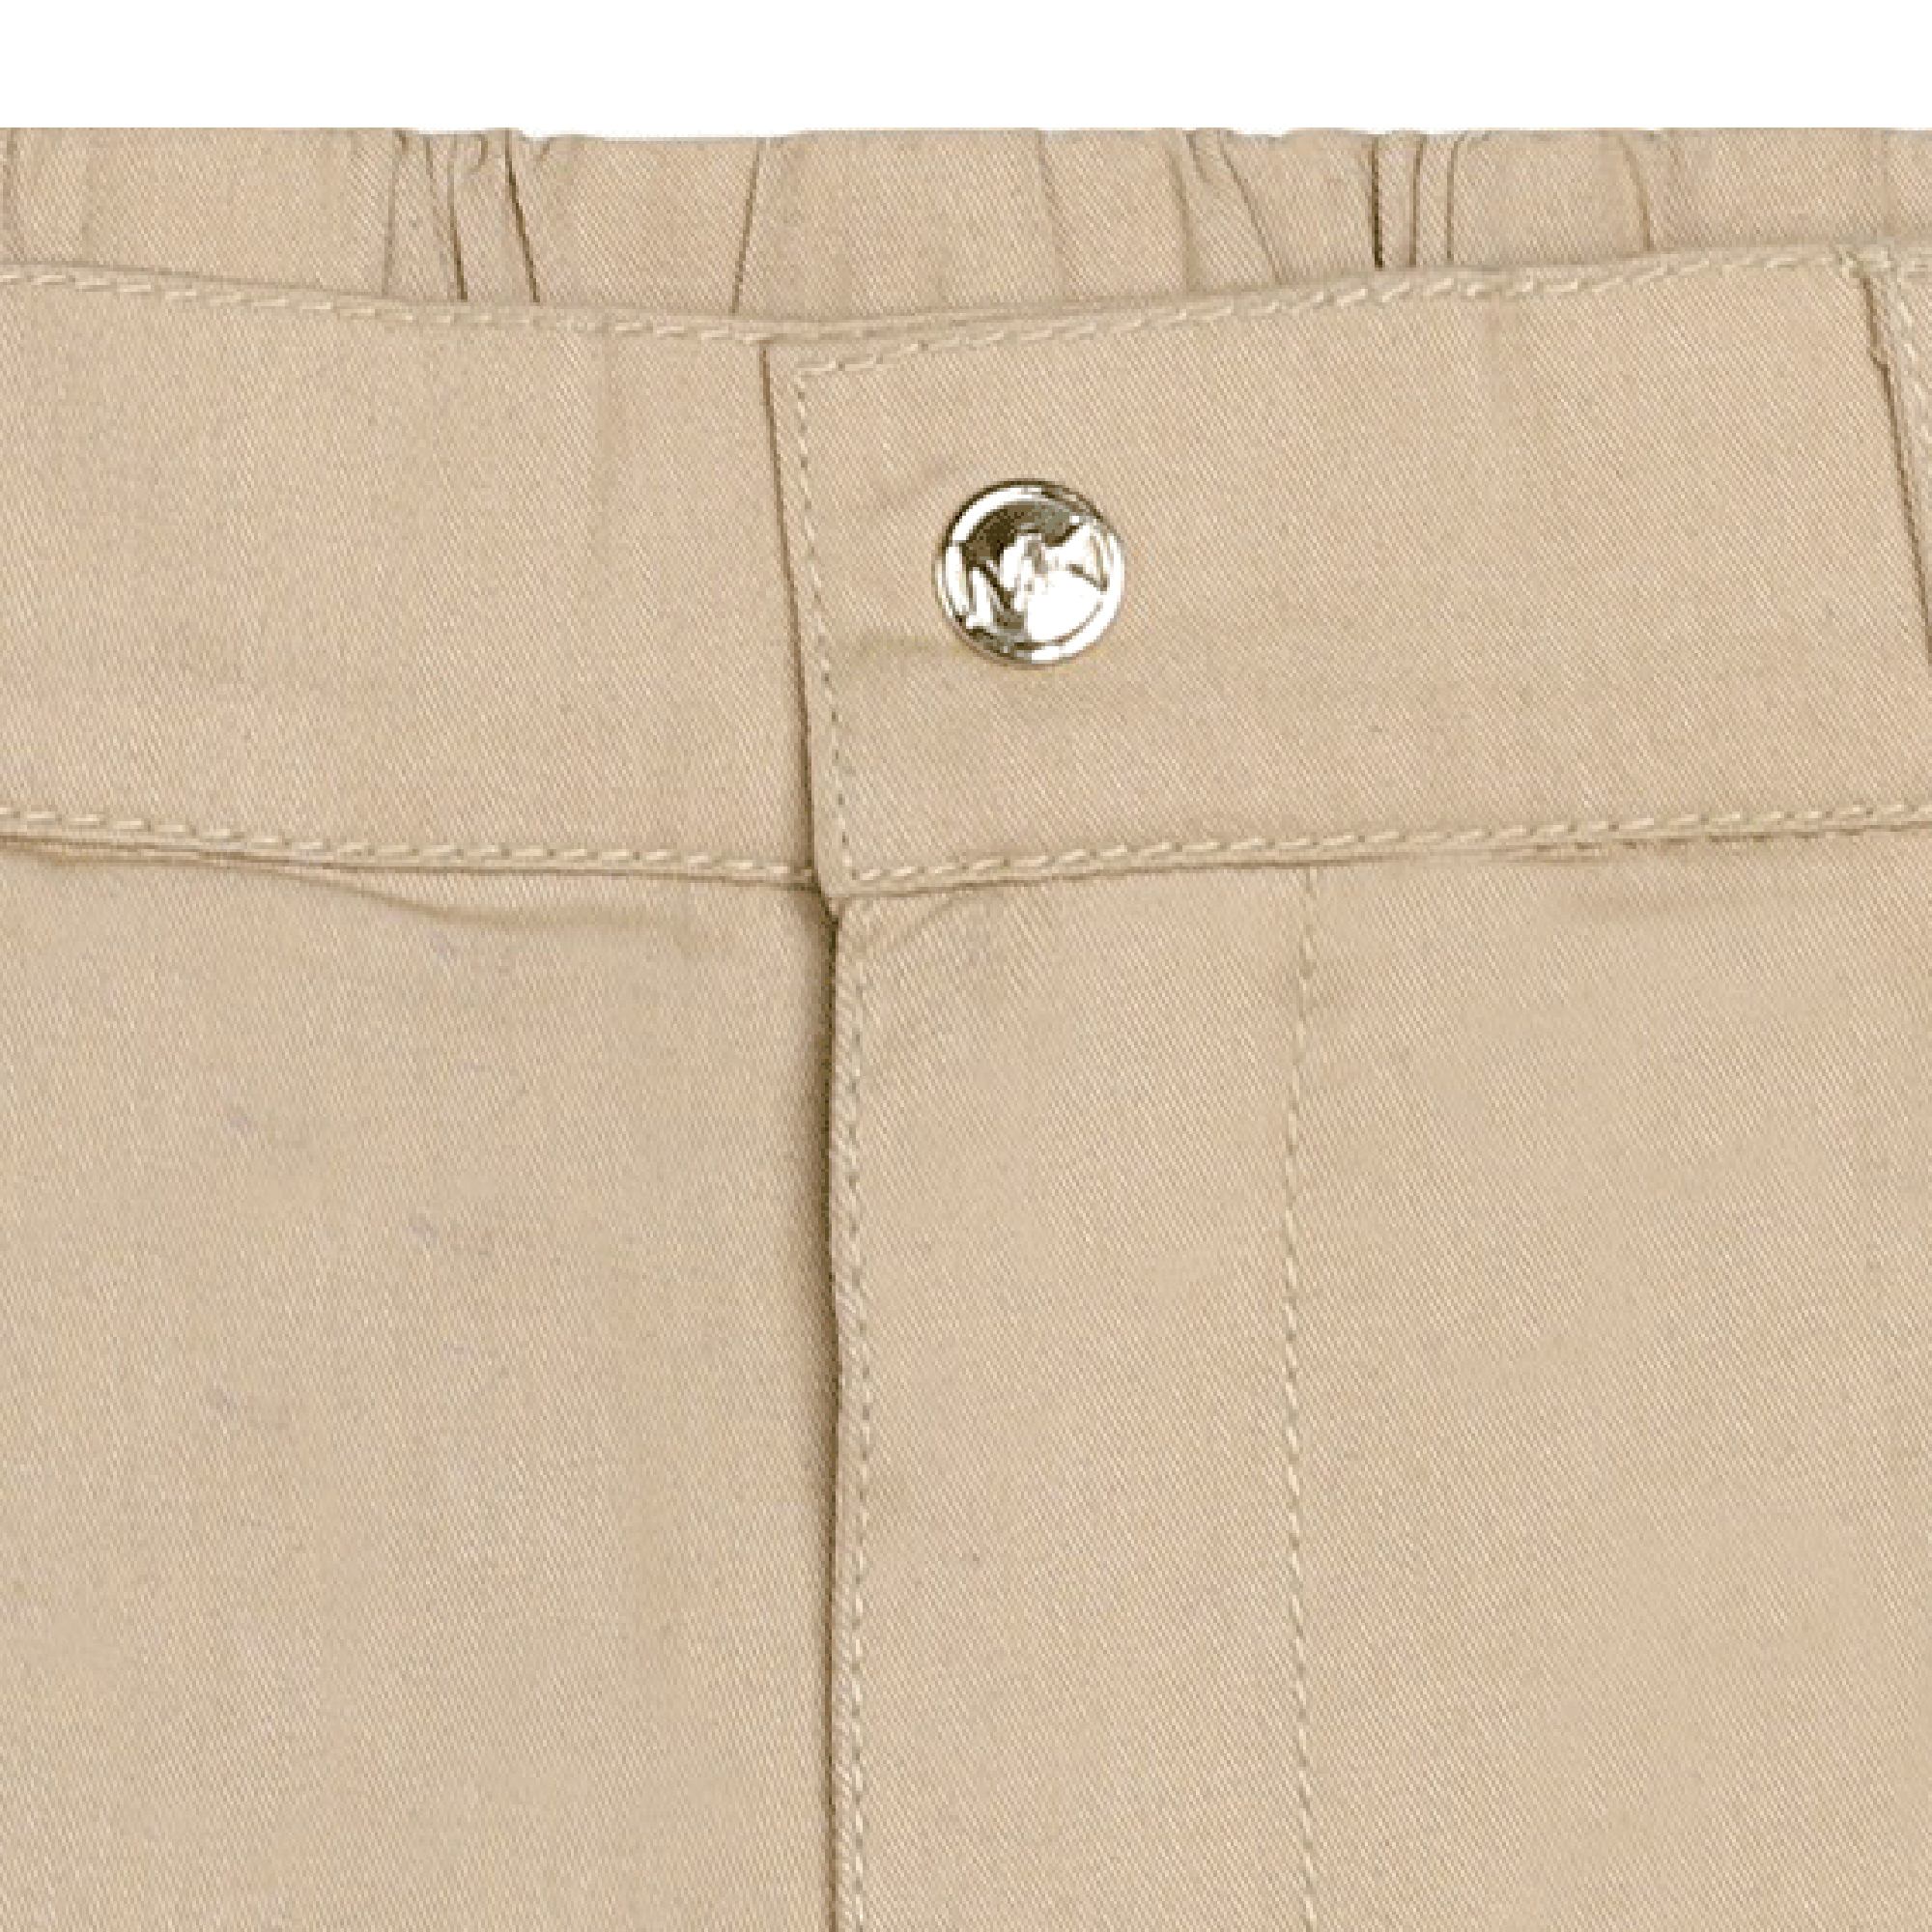 Cotton shorts MICHAEL KORS for GIRL